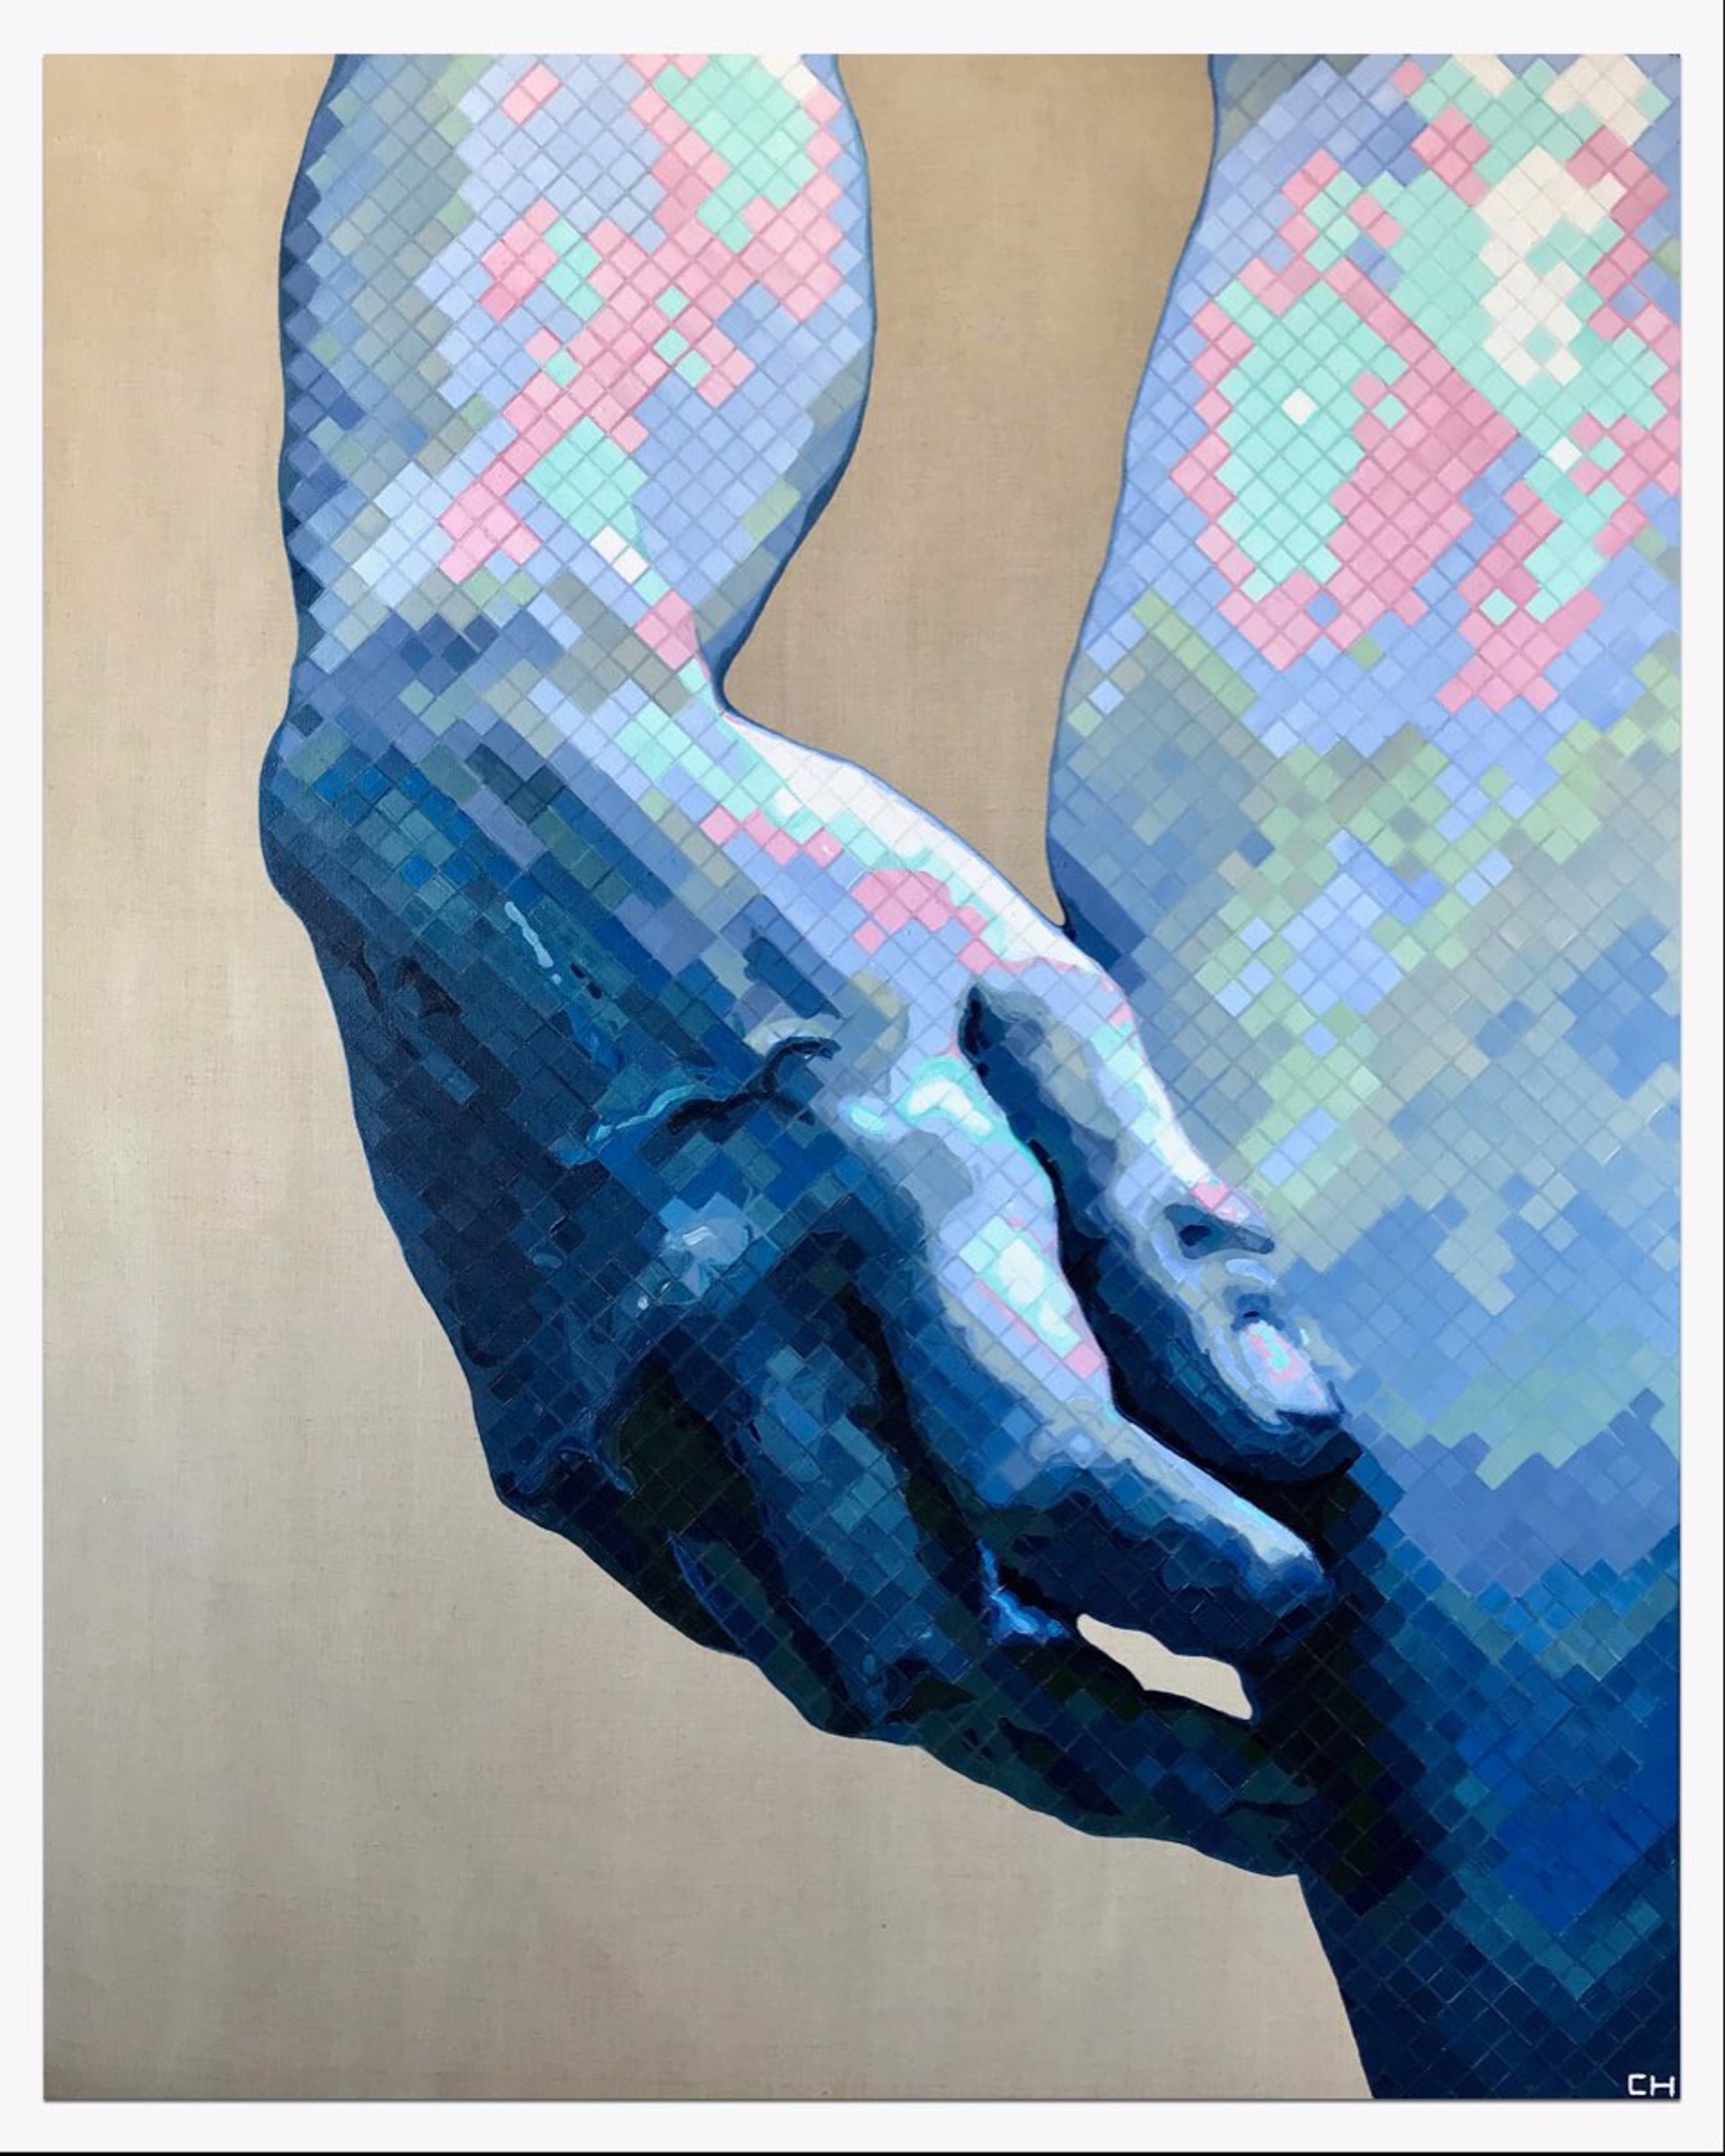 Hand of David by Charlie Hanavich